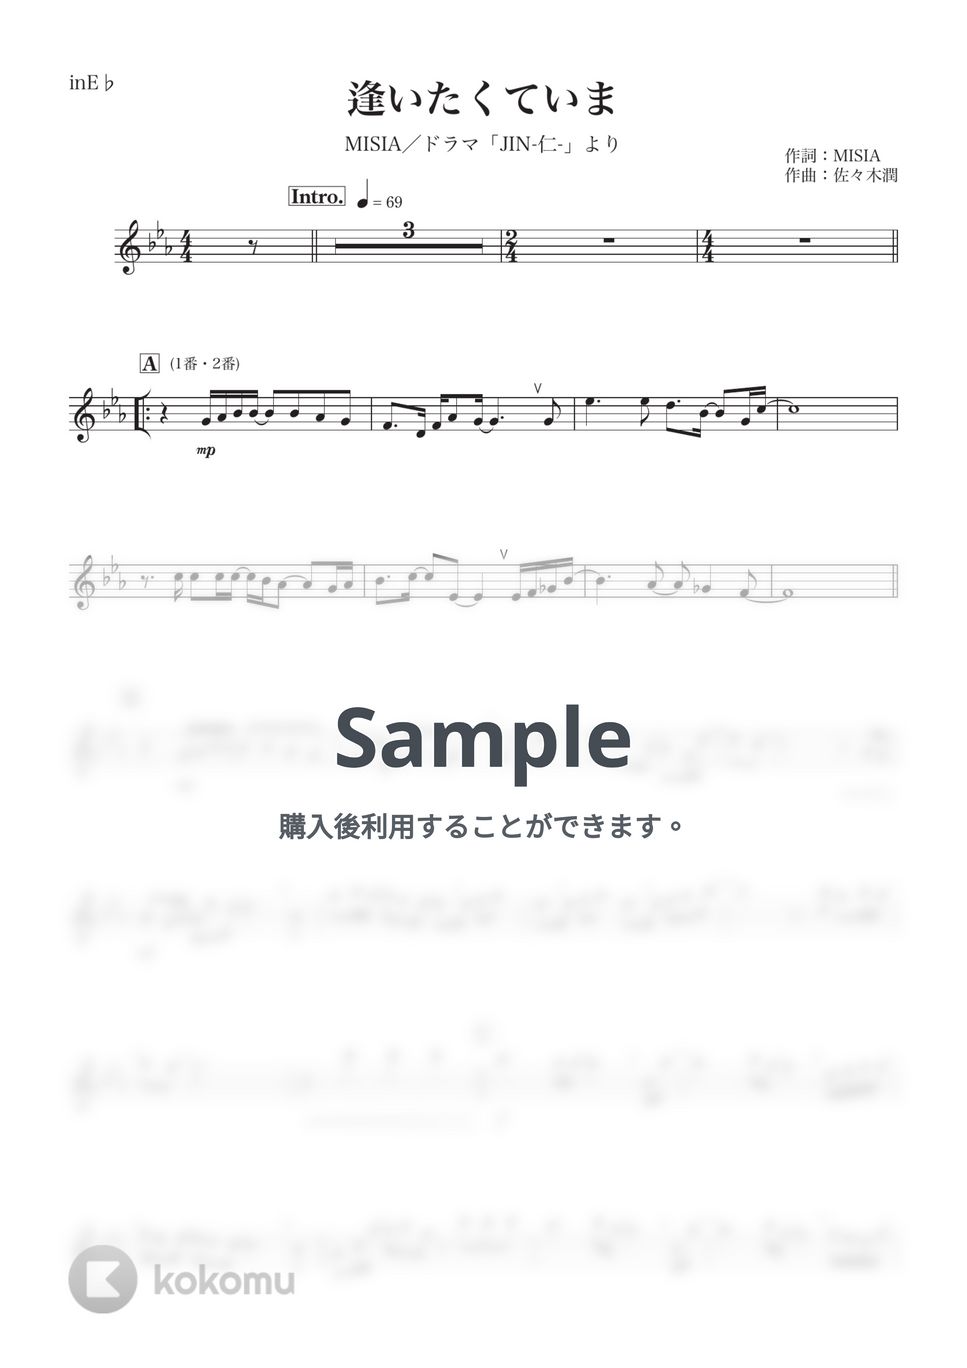 MISIA - 逢いたくていま (E♭) by kanamusic